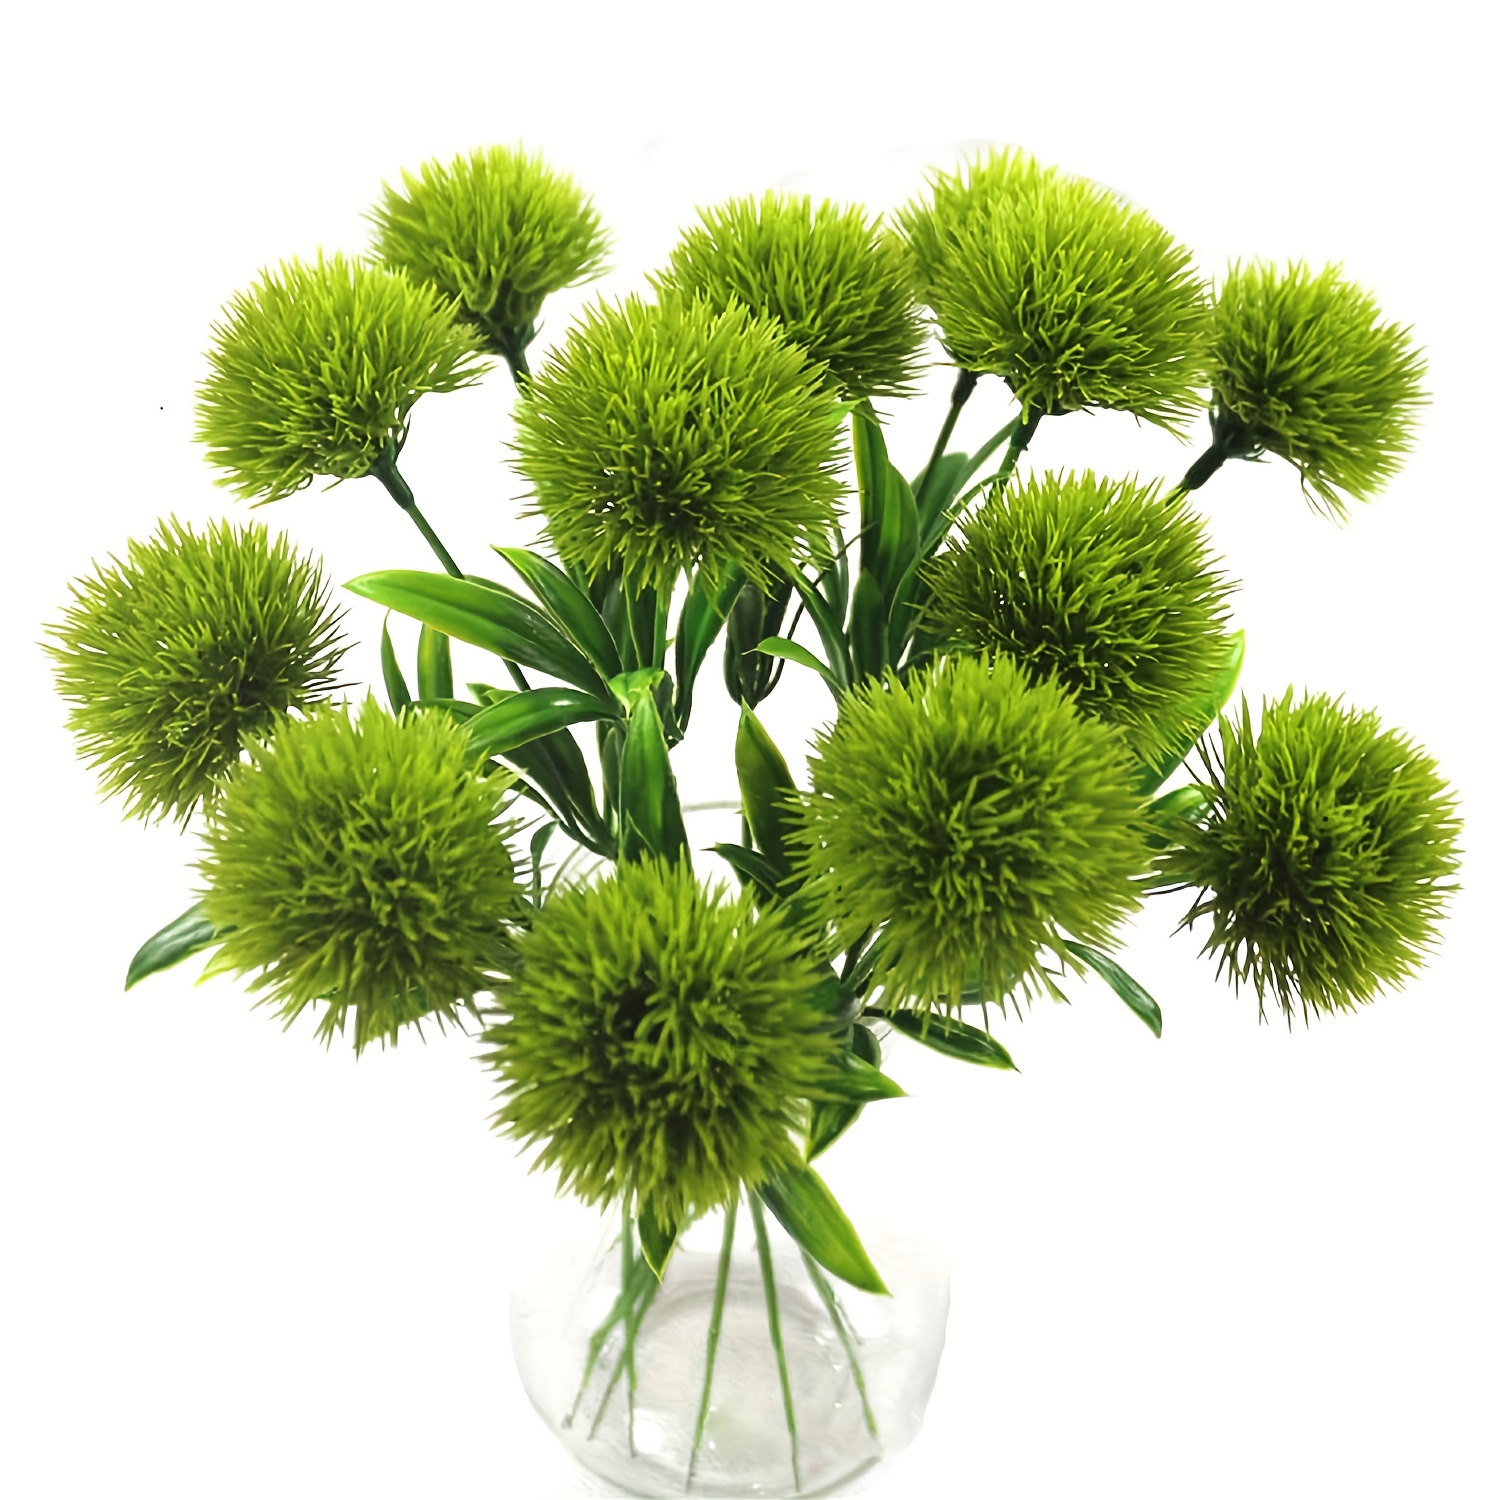 

10pcs Dandelion Artificial Flowers Plants Bouquet For Wedding Party Home Table Decor Spring Summer Decor (green)